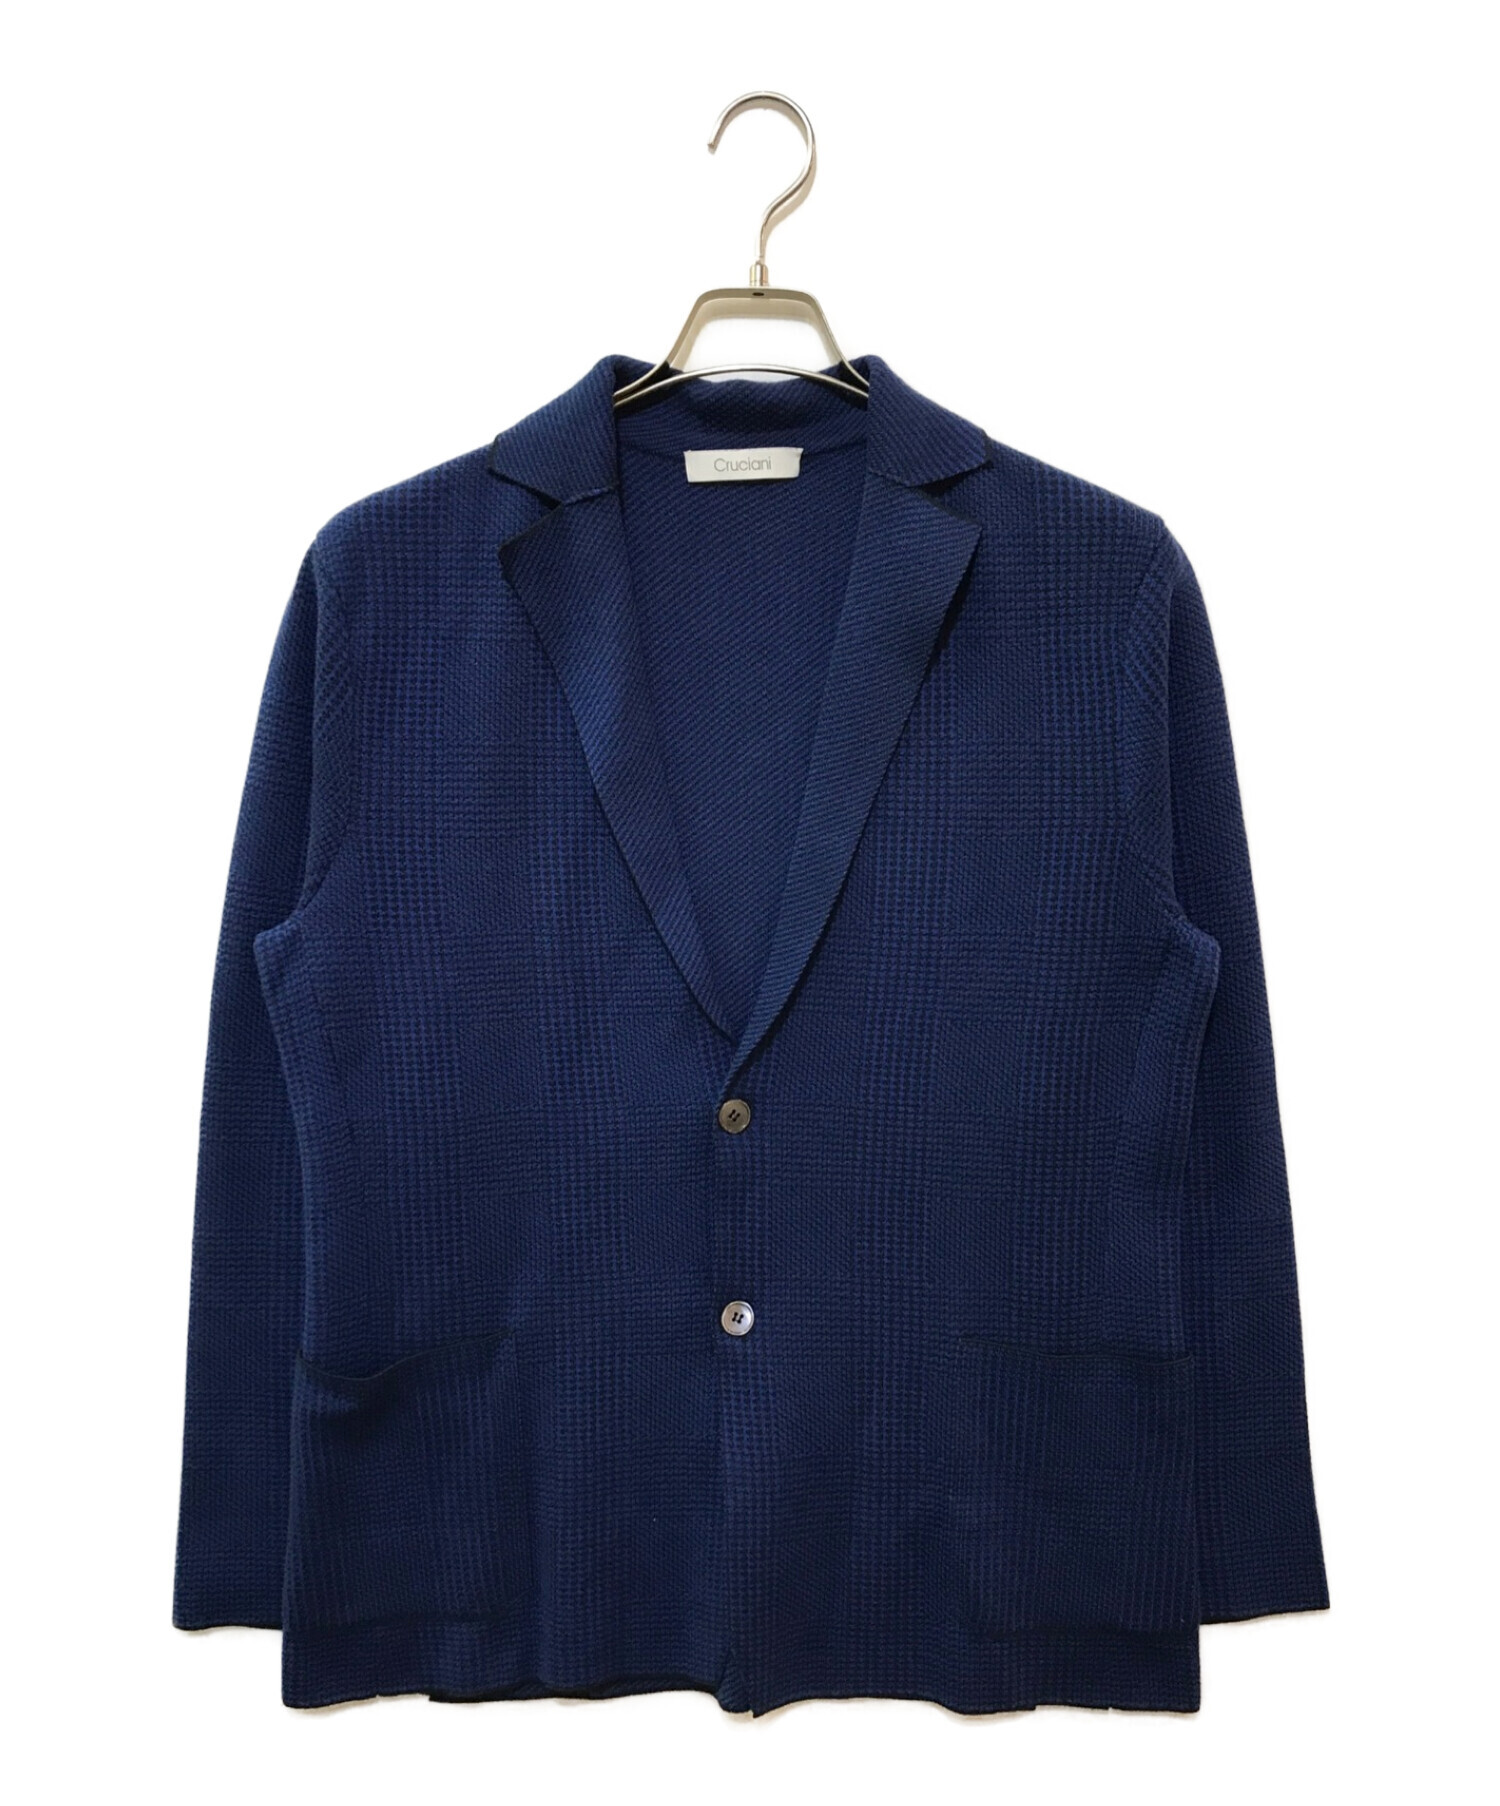 Cruciani (クルチアーニ) マイクロチェック ニットジャケット ブルー サイズ:48